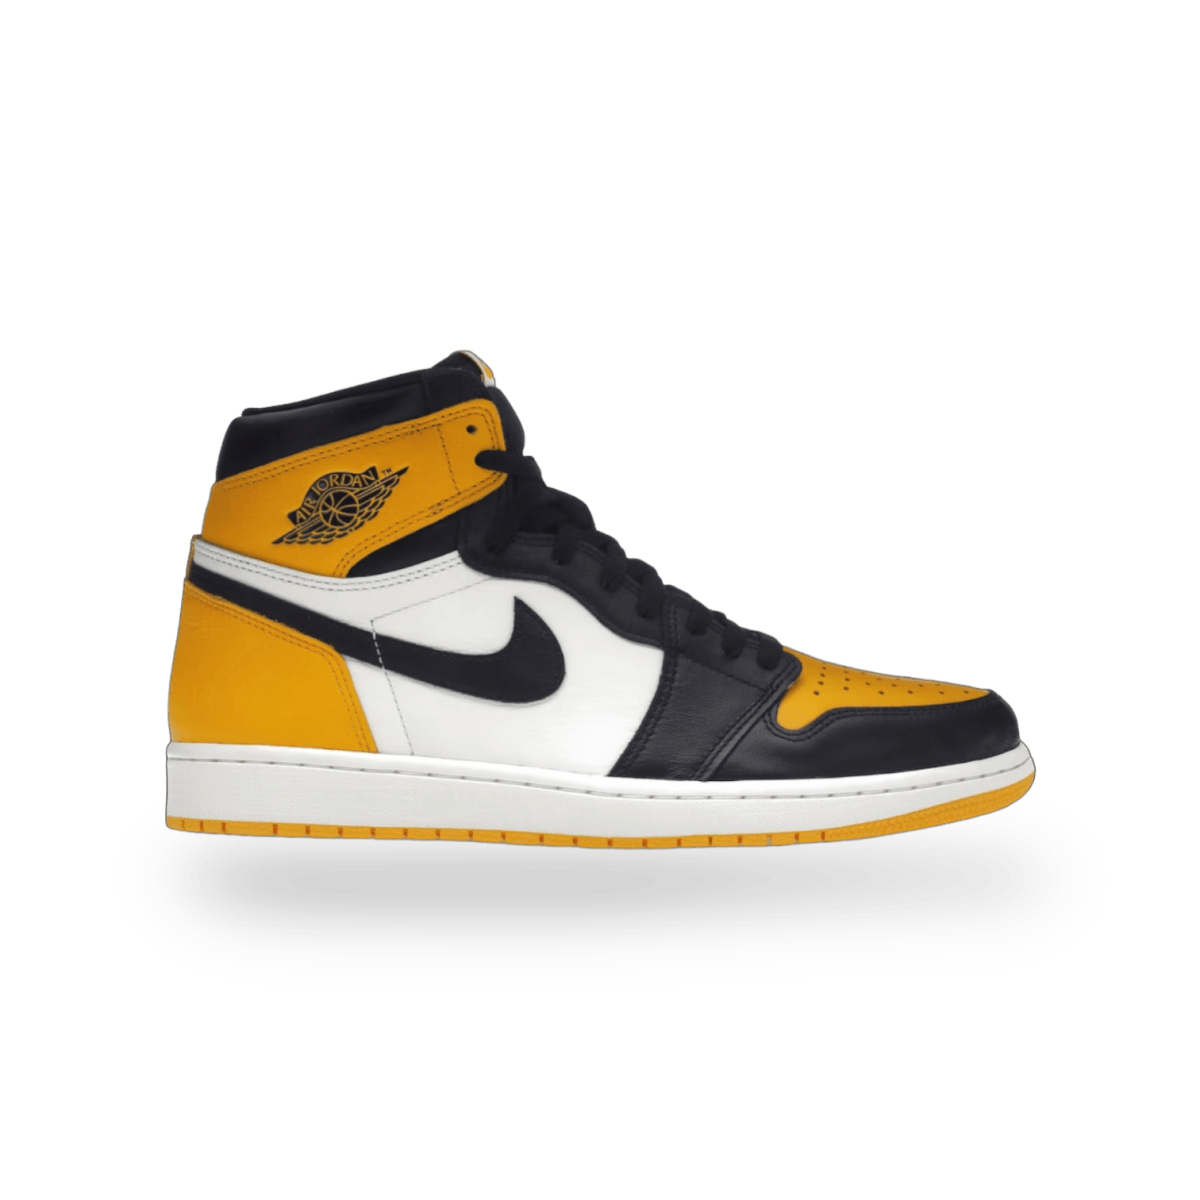 Jordan 1 Retro High OG Taxi - High Sneaker - Jawns on Fire Sneakers & Streetwear